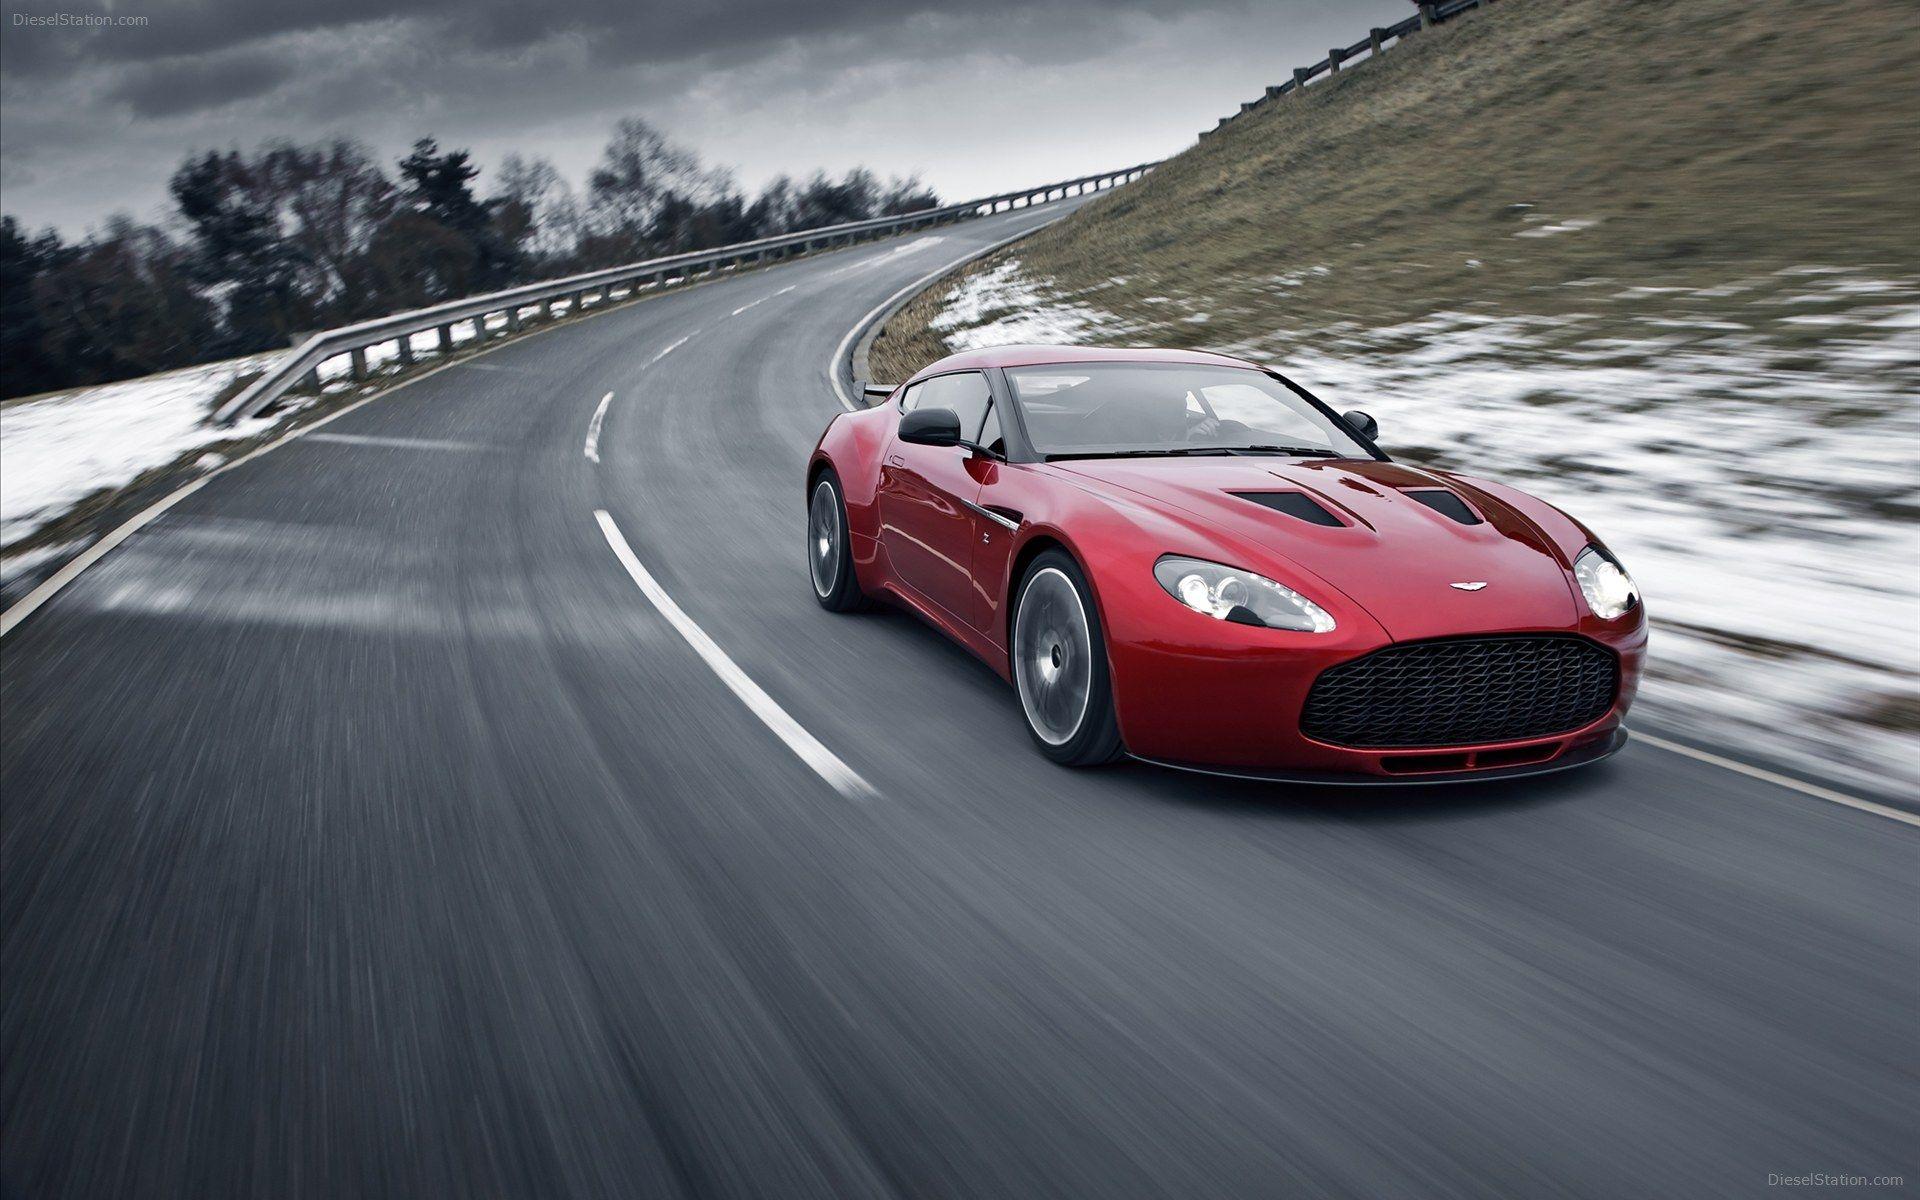 Aston Martin Vanquish Zagato red supercar wallpapers